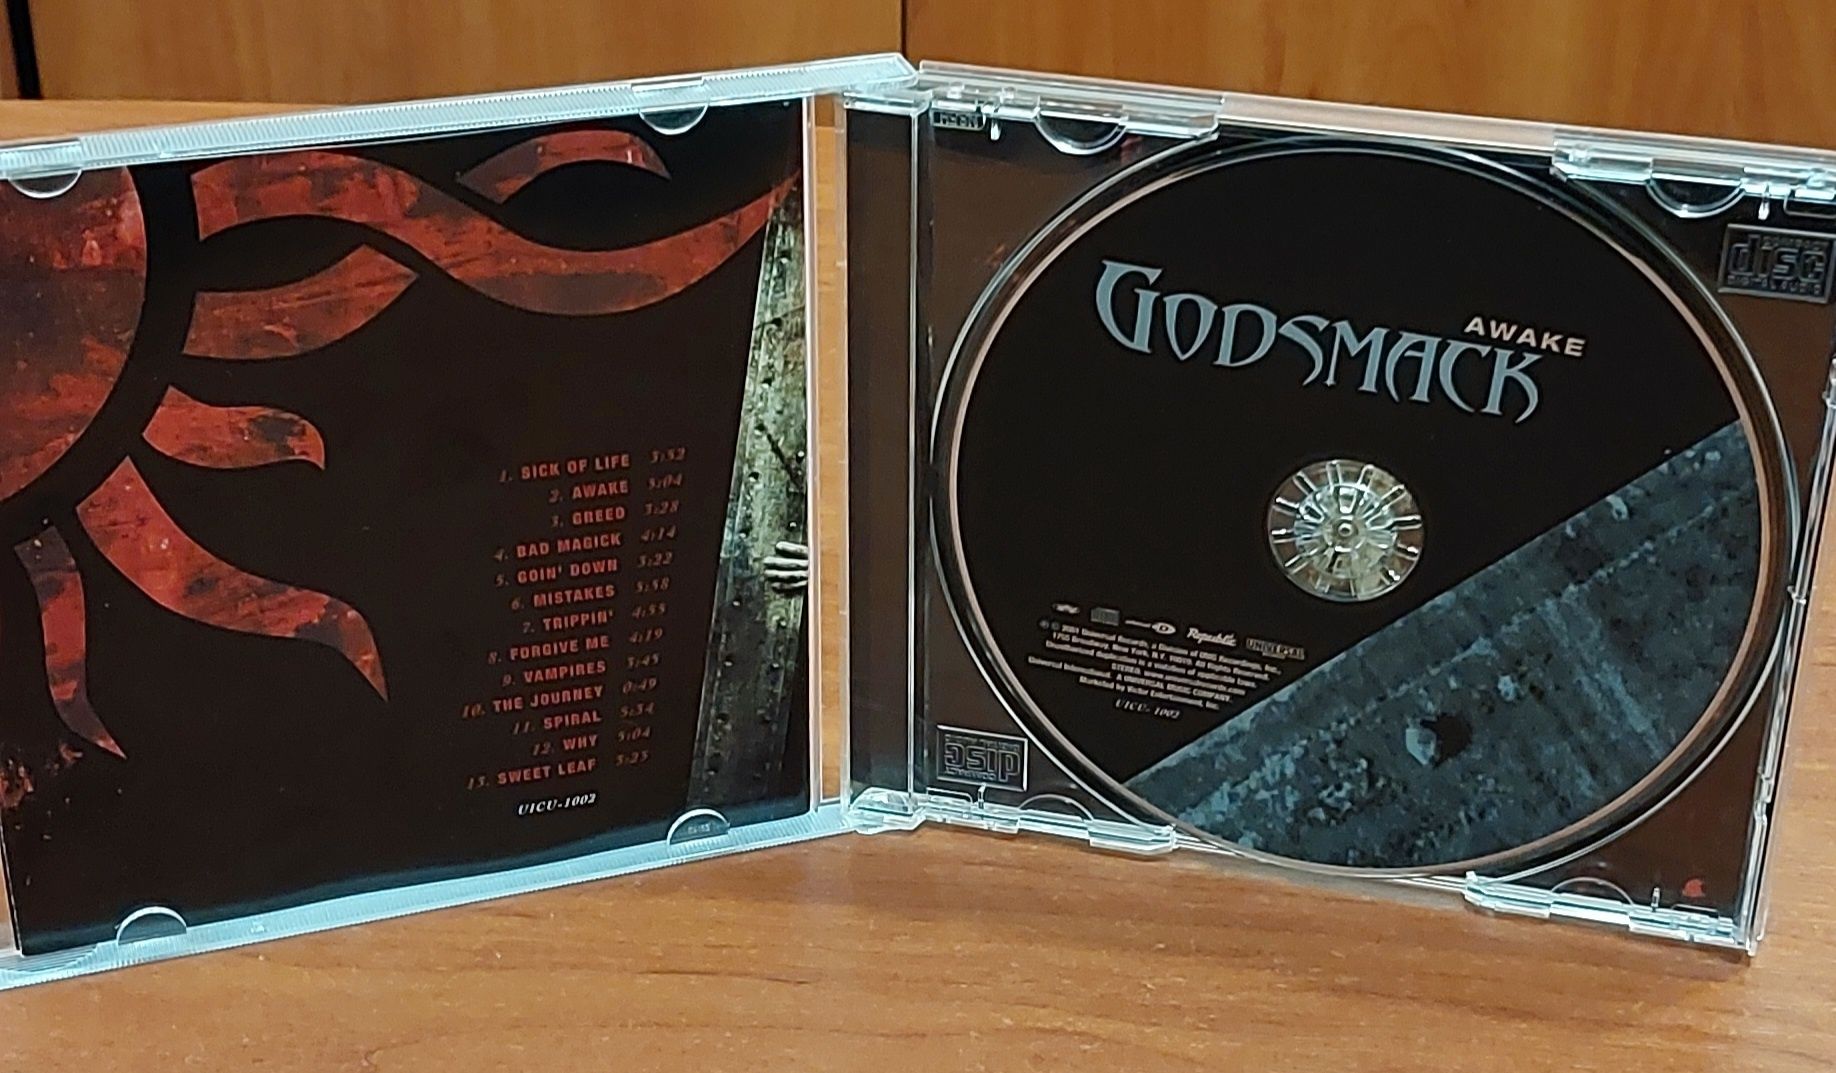 Godsmack "Awake" 2000.